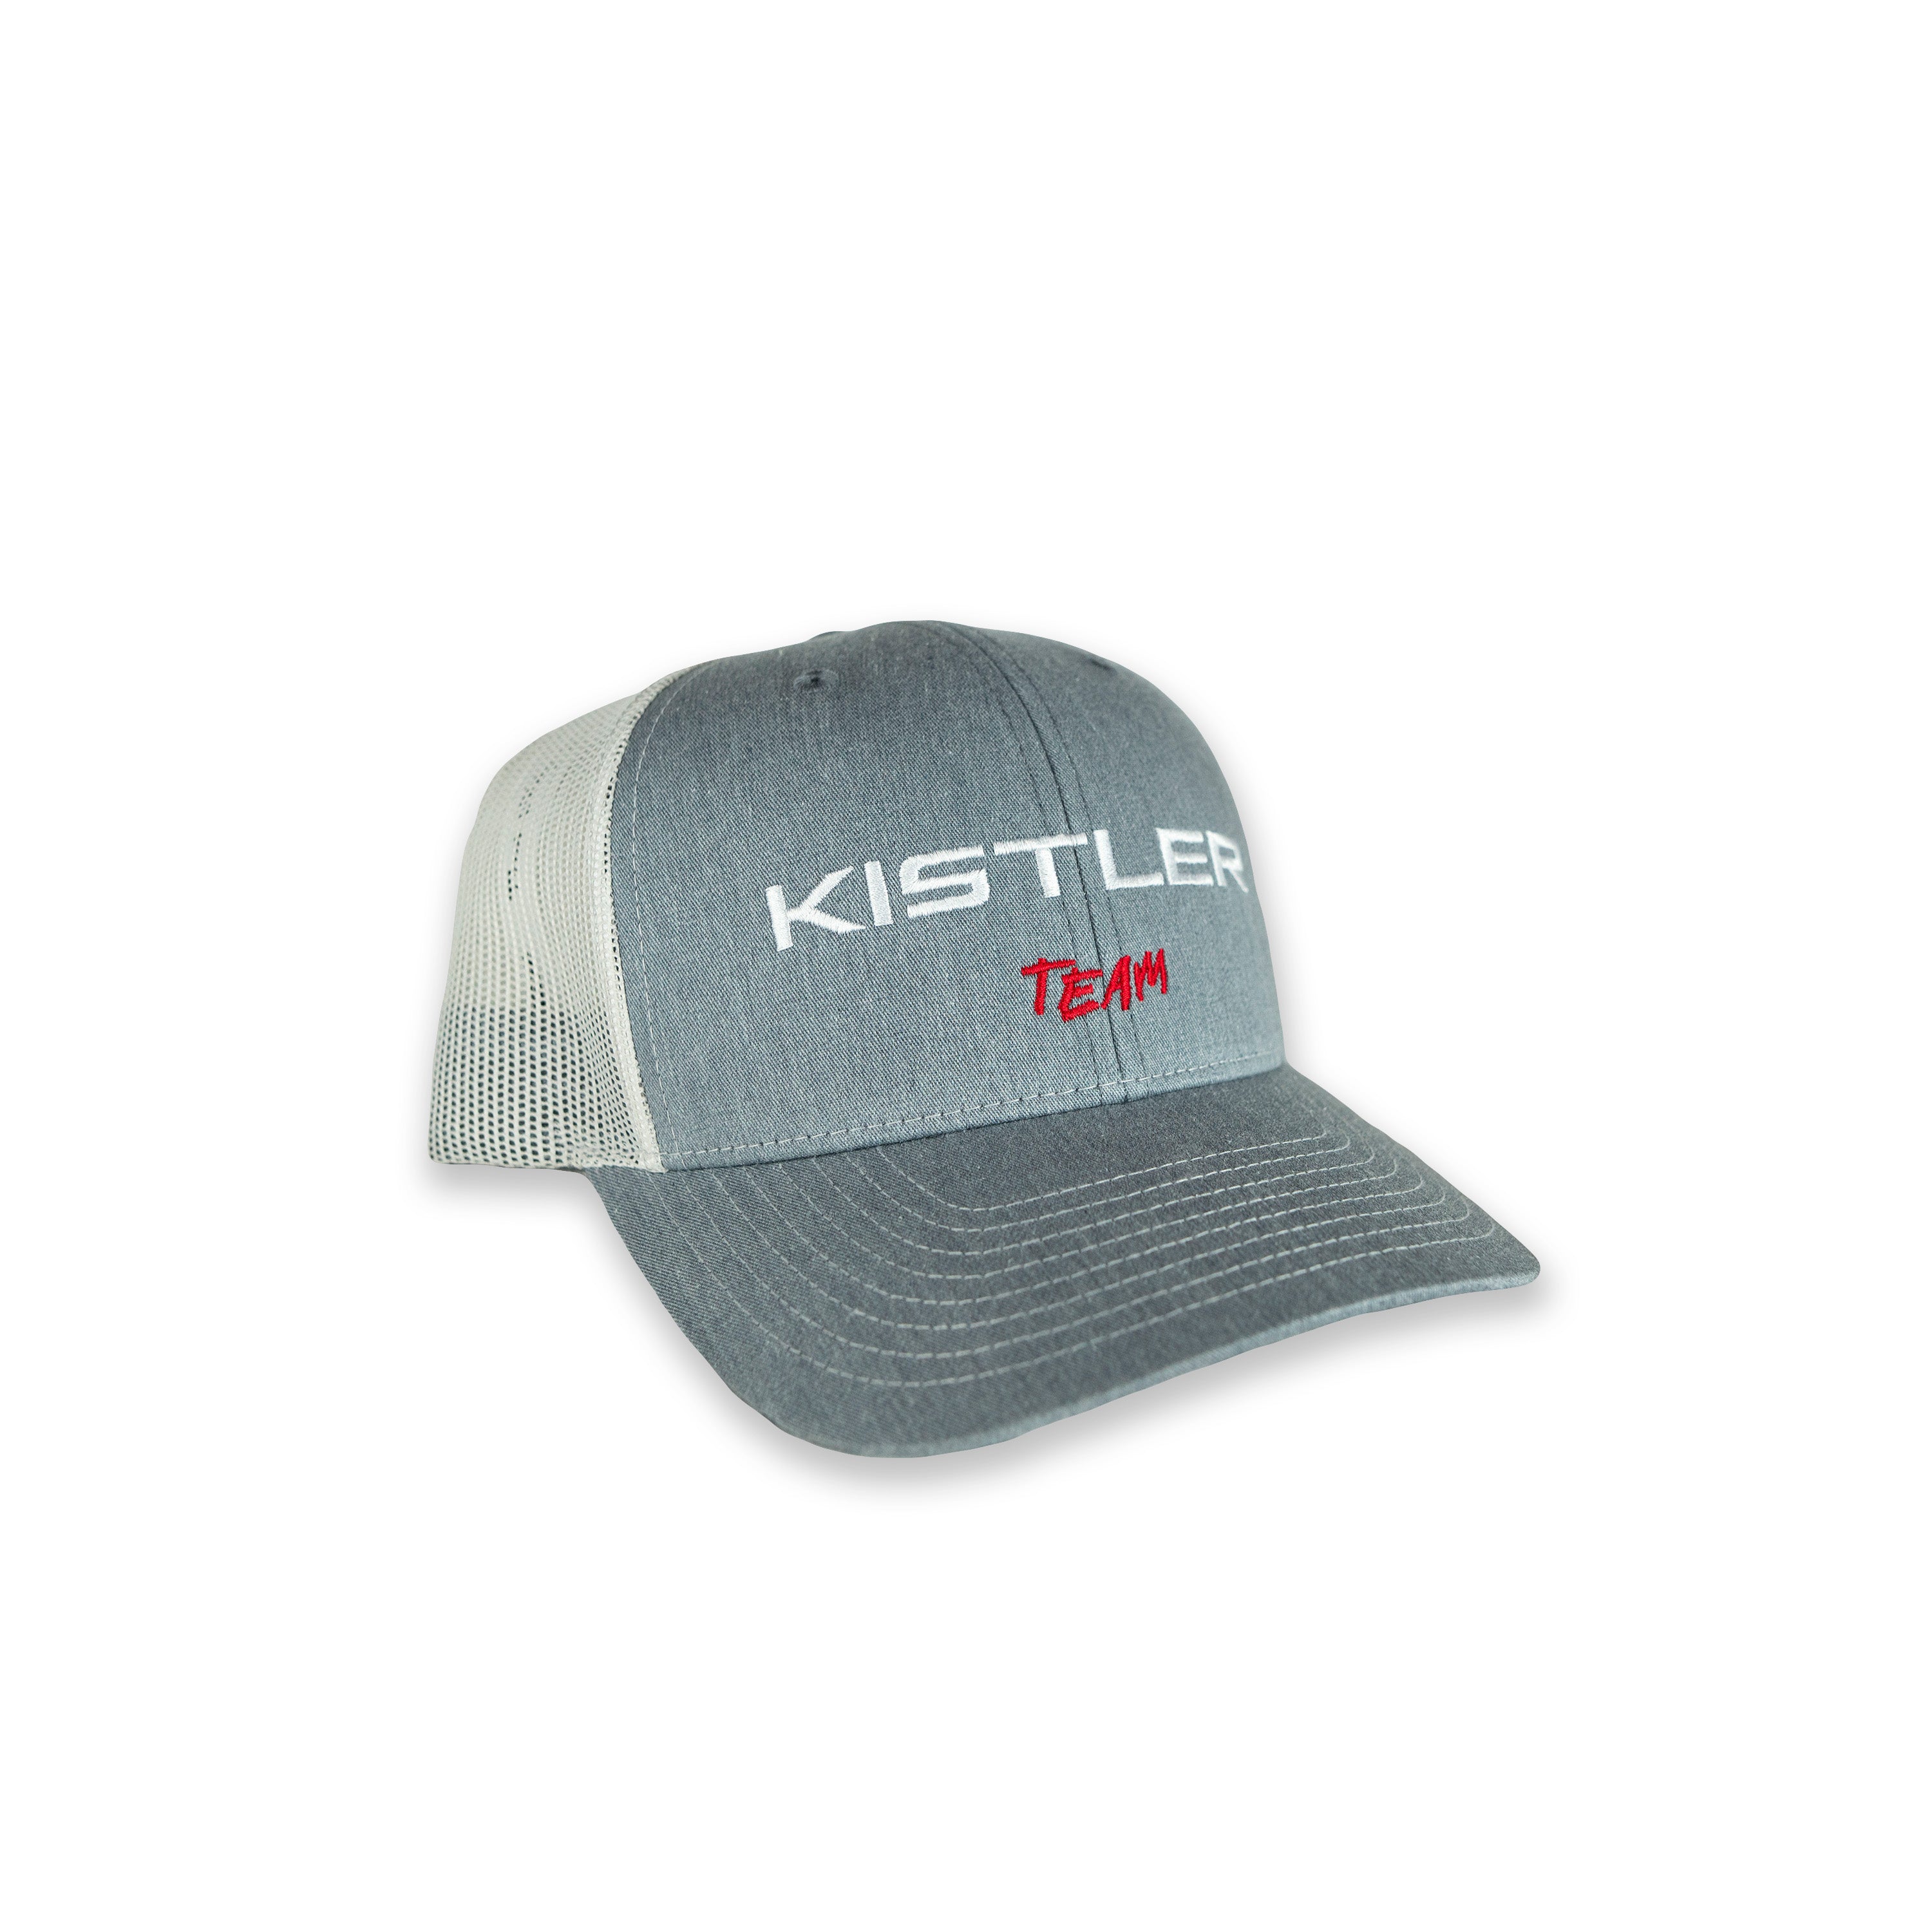 Team Kistler Caps Charcoal/Black 112